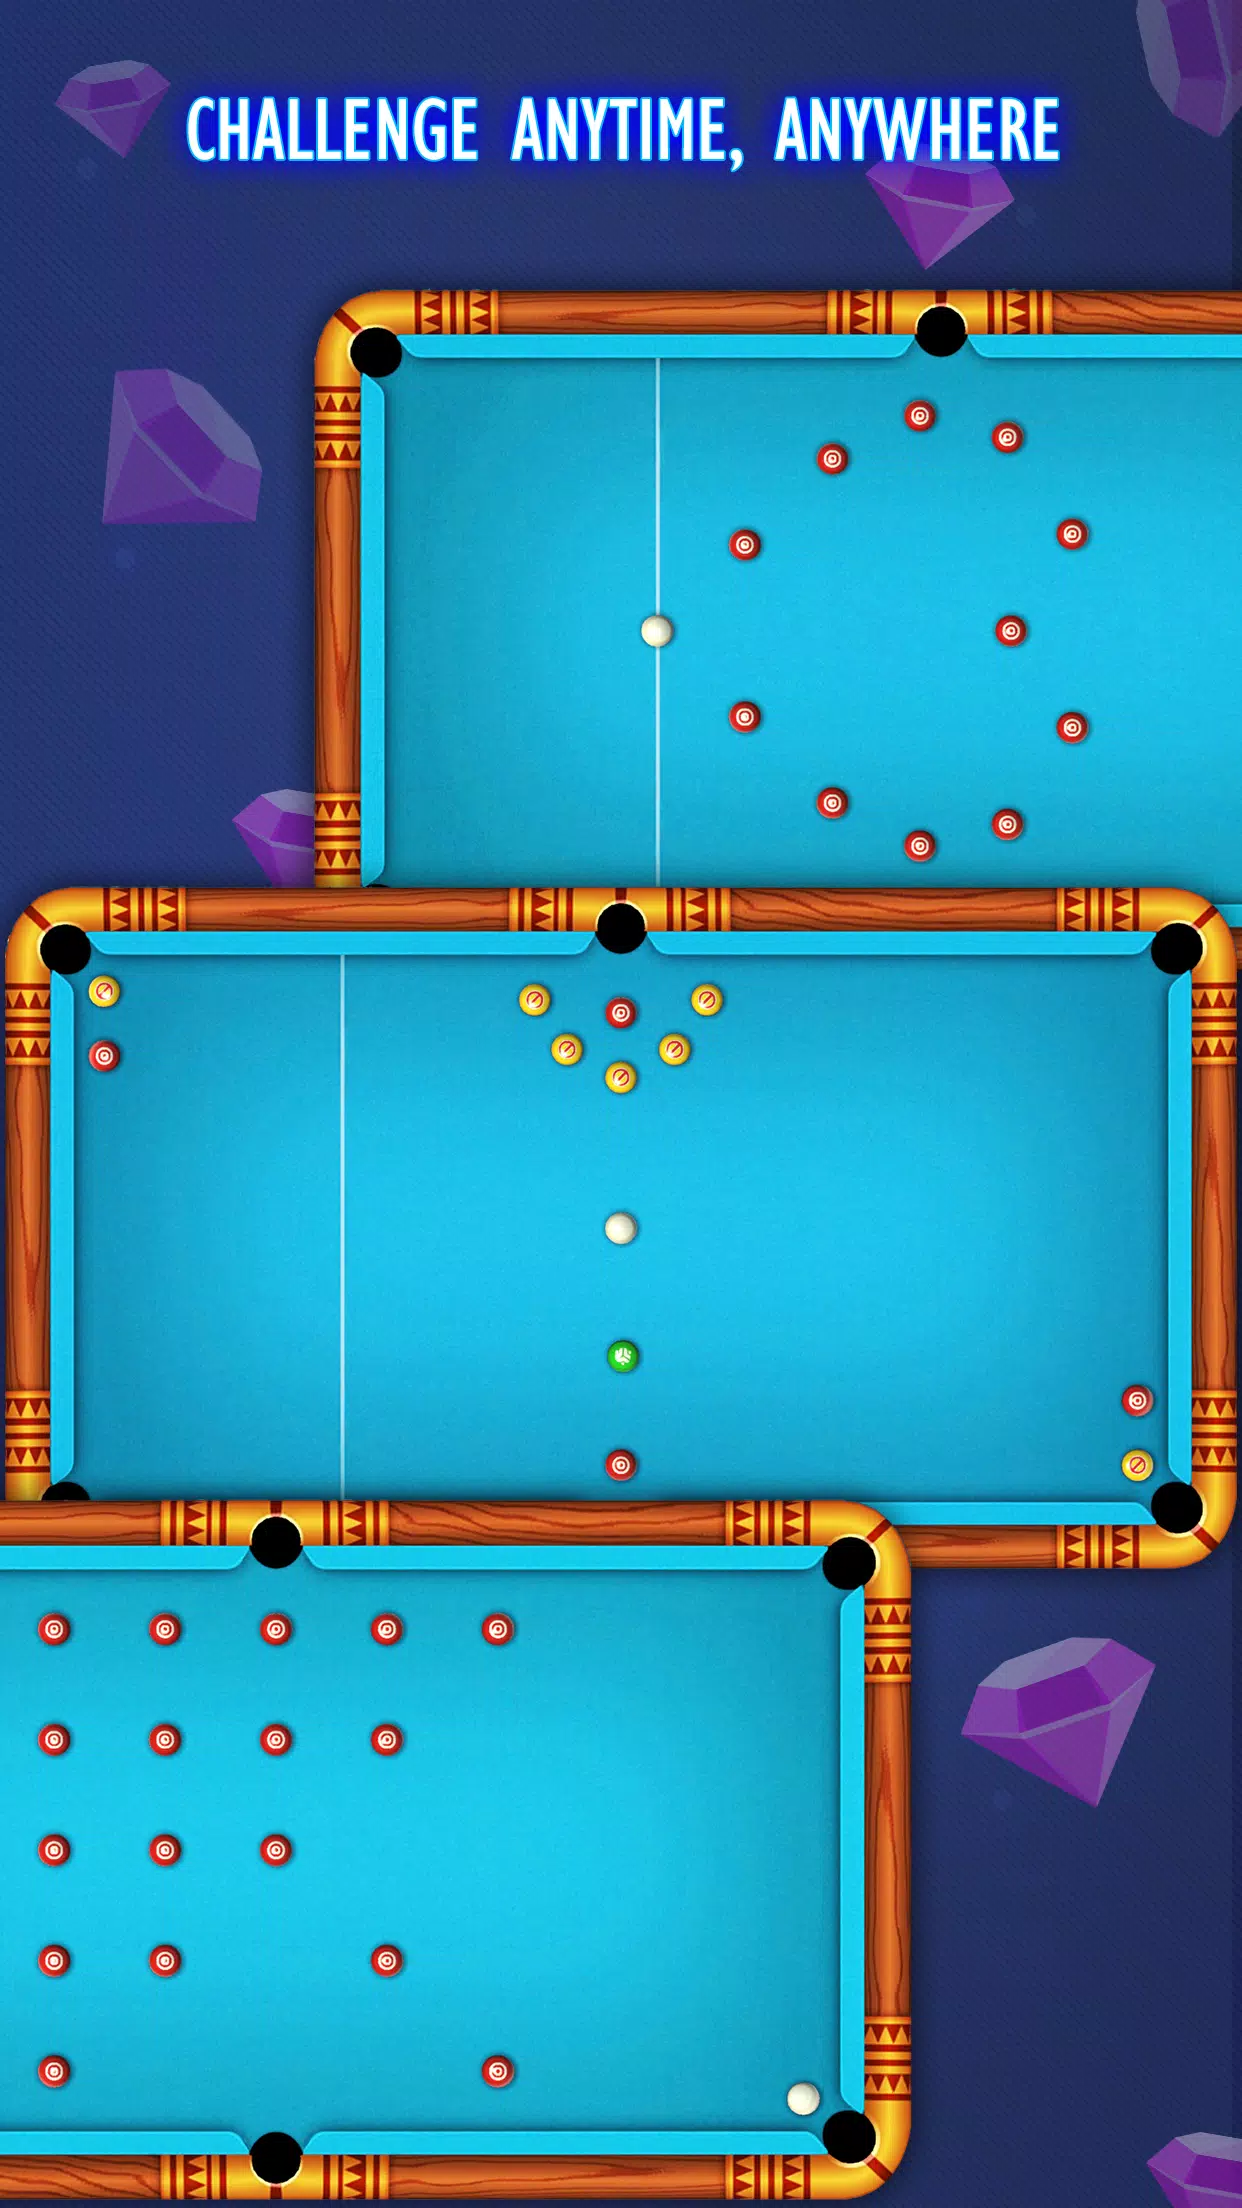 Desapego Games - 8 Ball Pool > 8 ball pool hack 100% atualizado